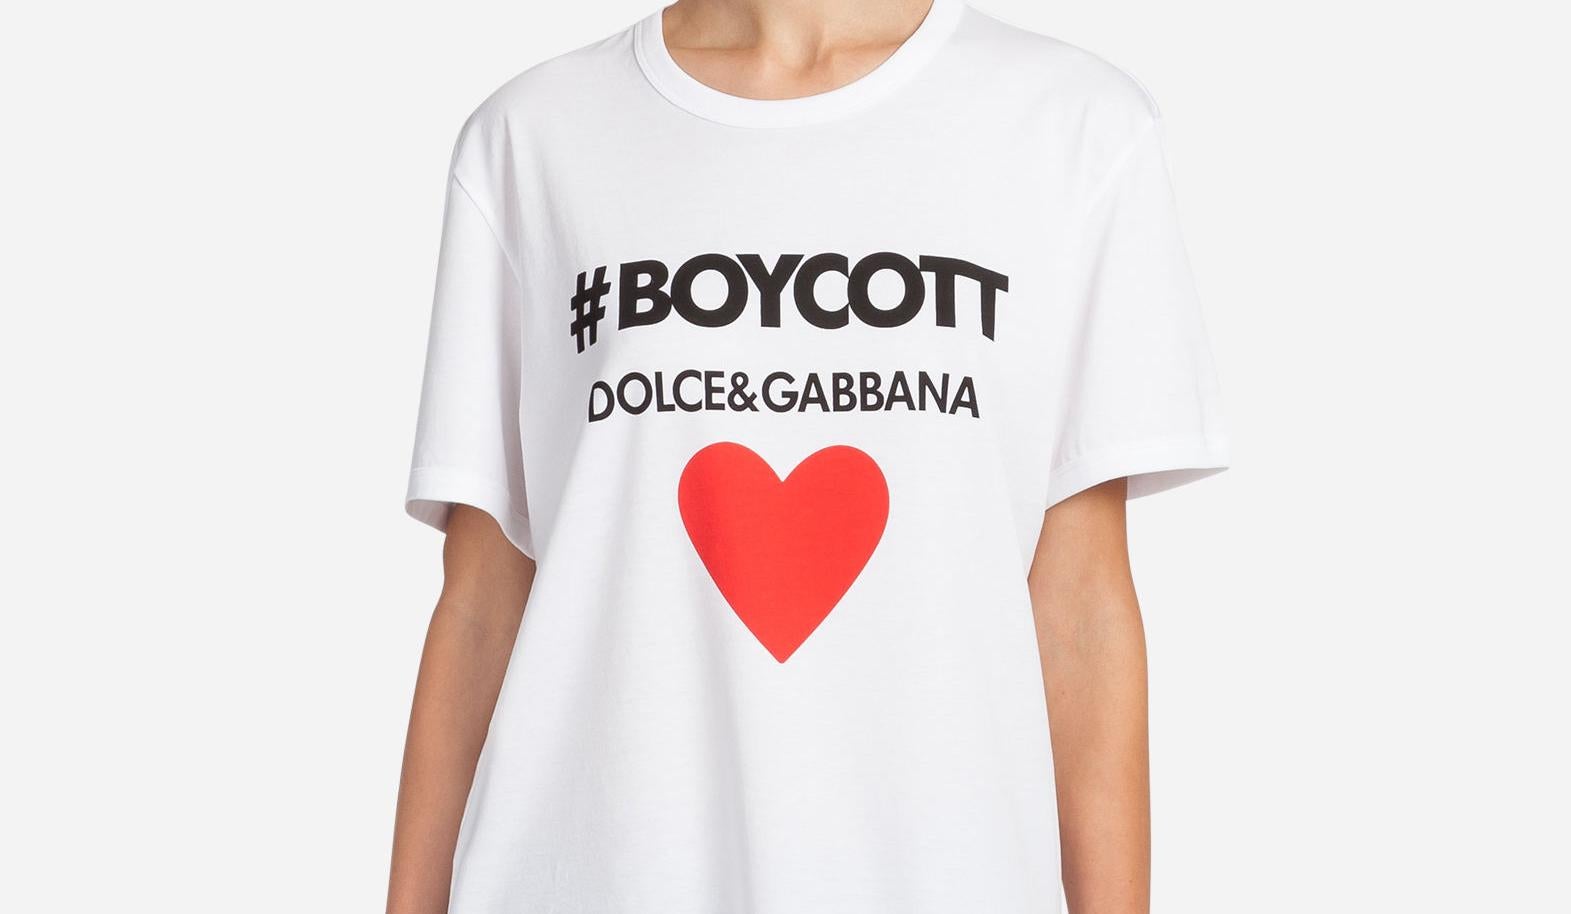 boycott dolce and gabbana t shirt